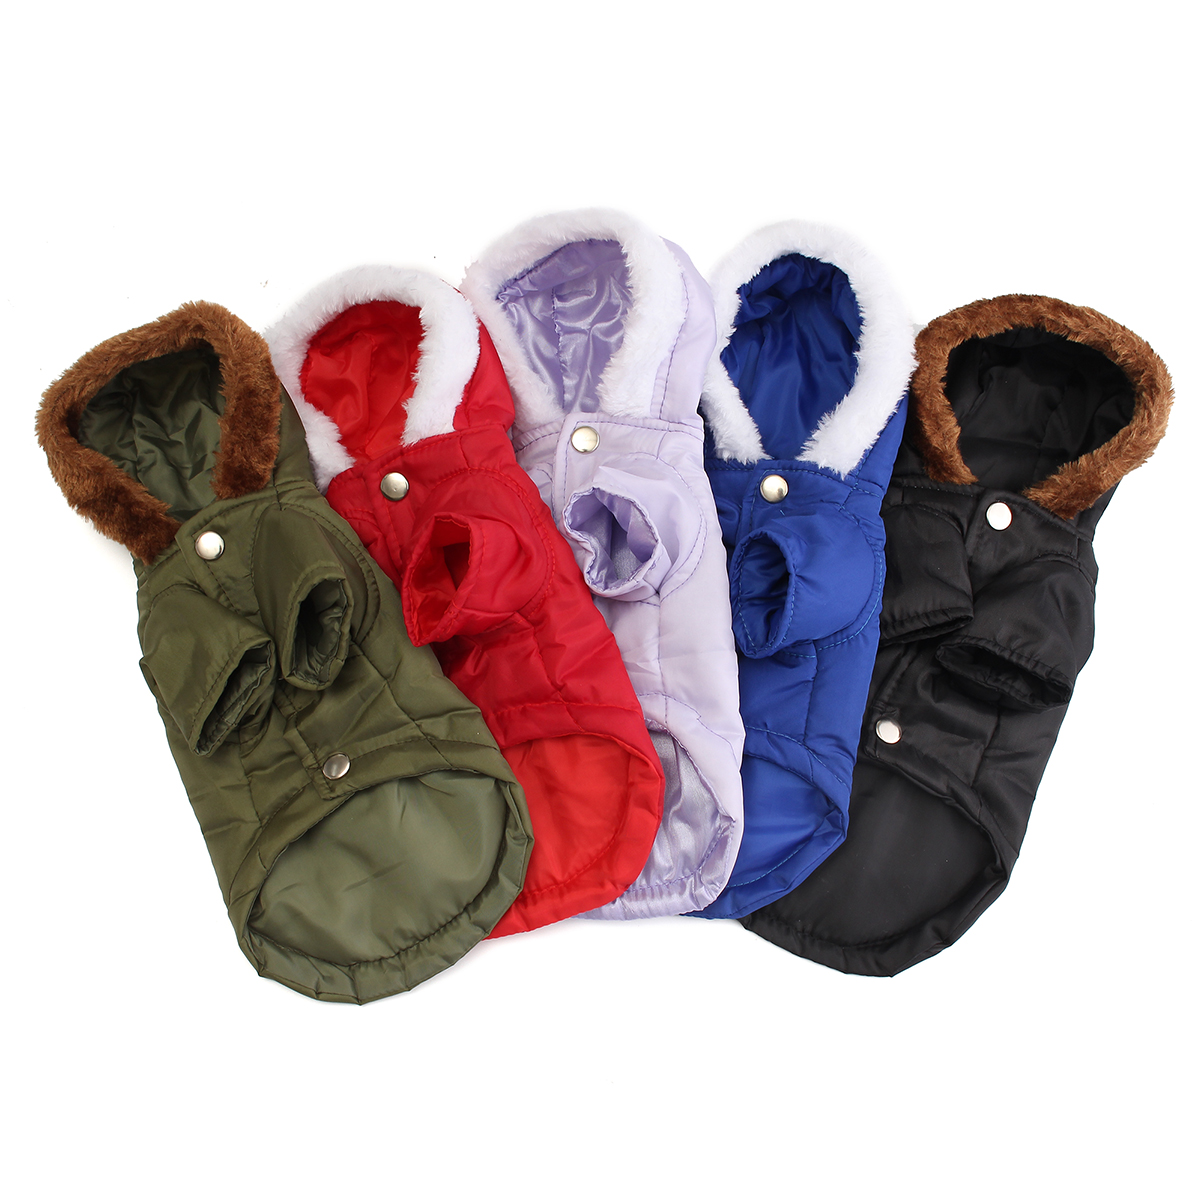 Dog-Pet-Warm-Cotton-Jacket-Coat-Hoodie-Puppy-Winter-Clothes-Pet-Costume-1967051-1